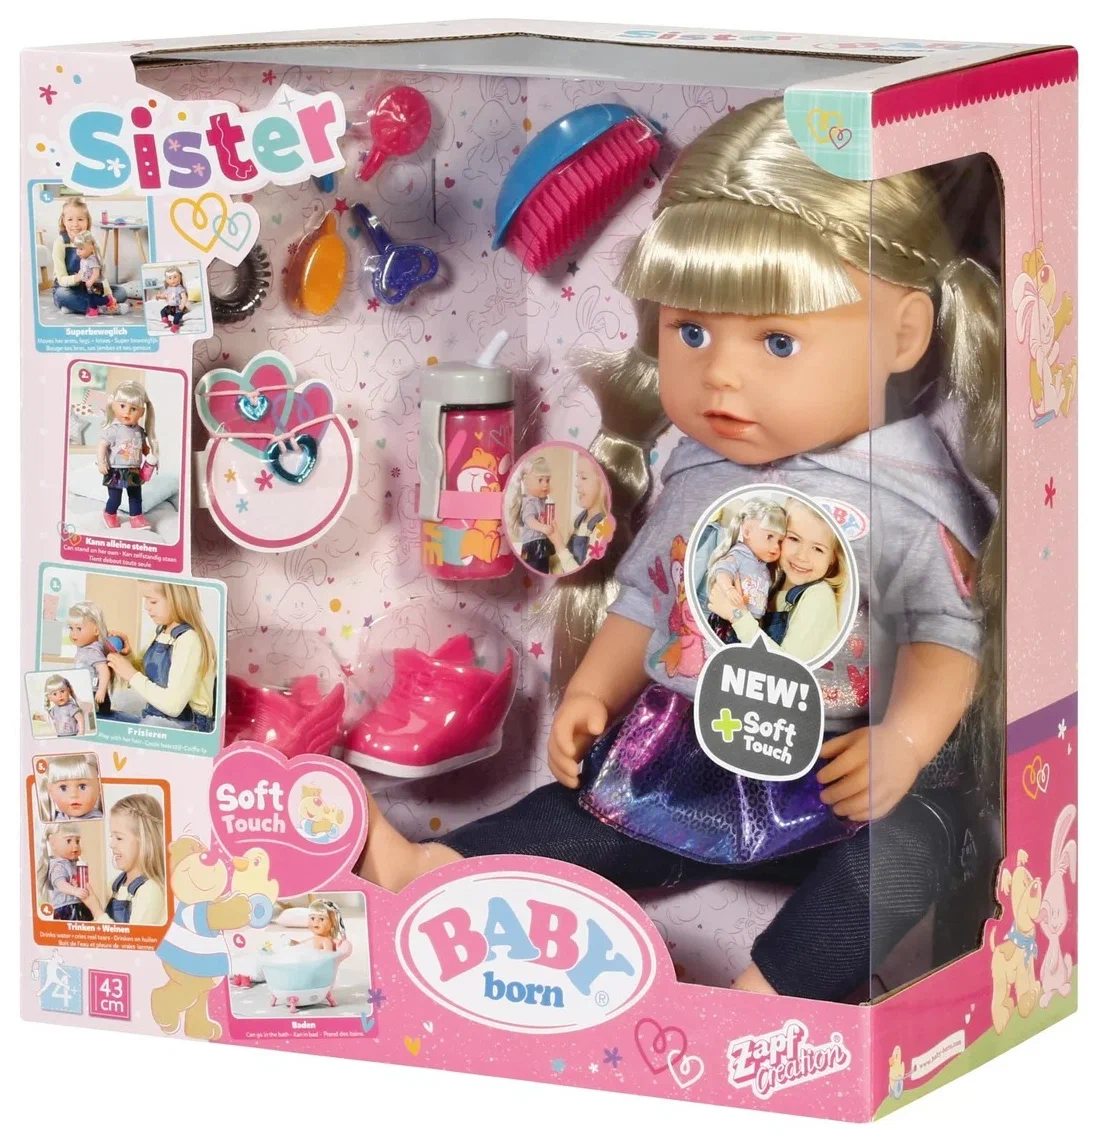 Zapf Creation Baby Born "Сестренка-Модница 2019", 43 см, 824-603 - высота куклы: 43 см